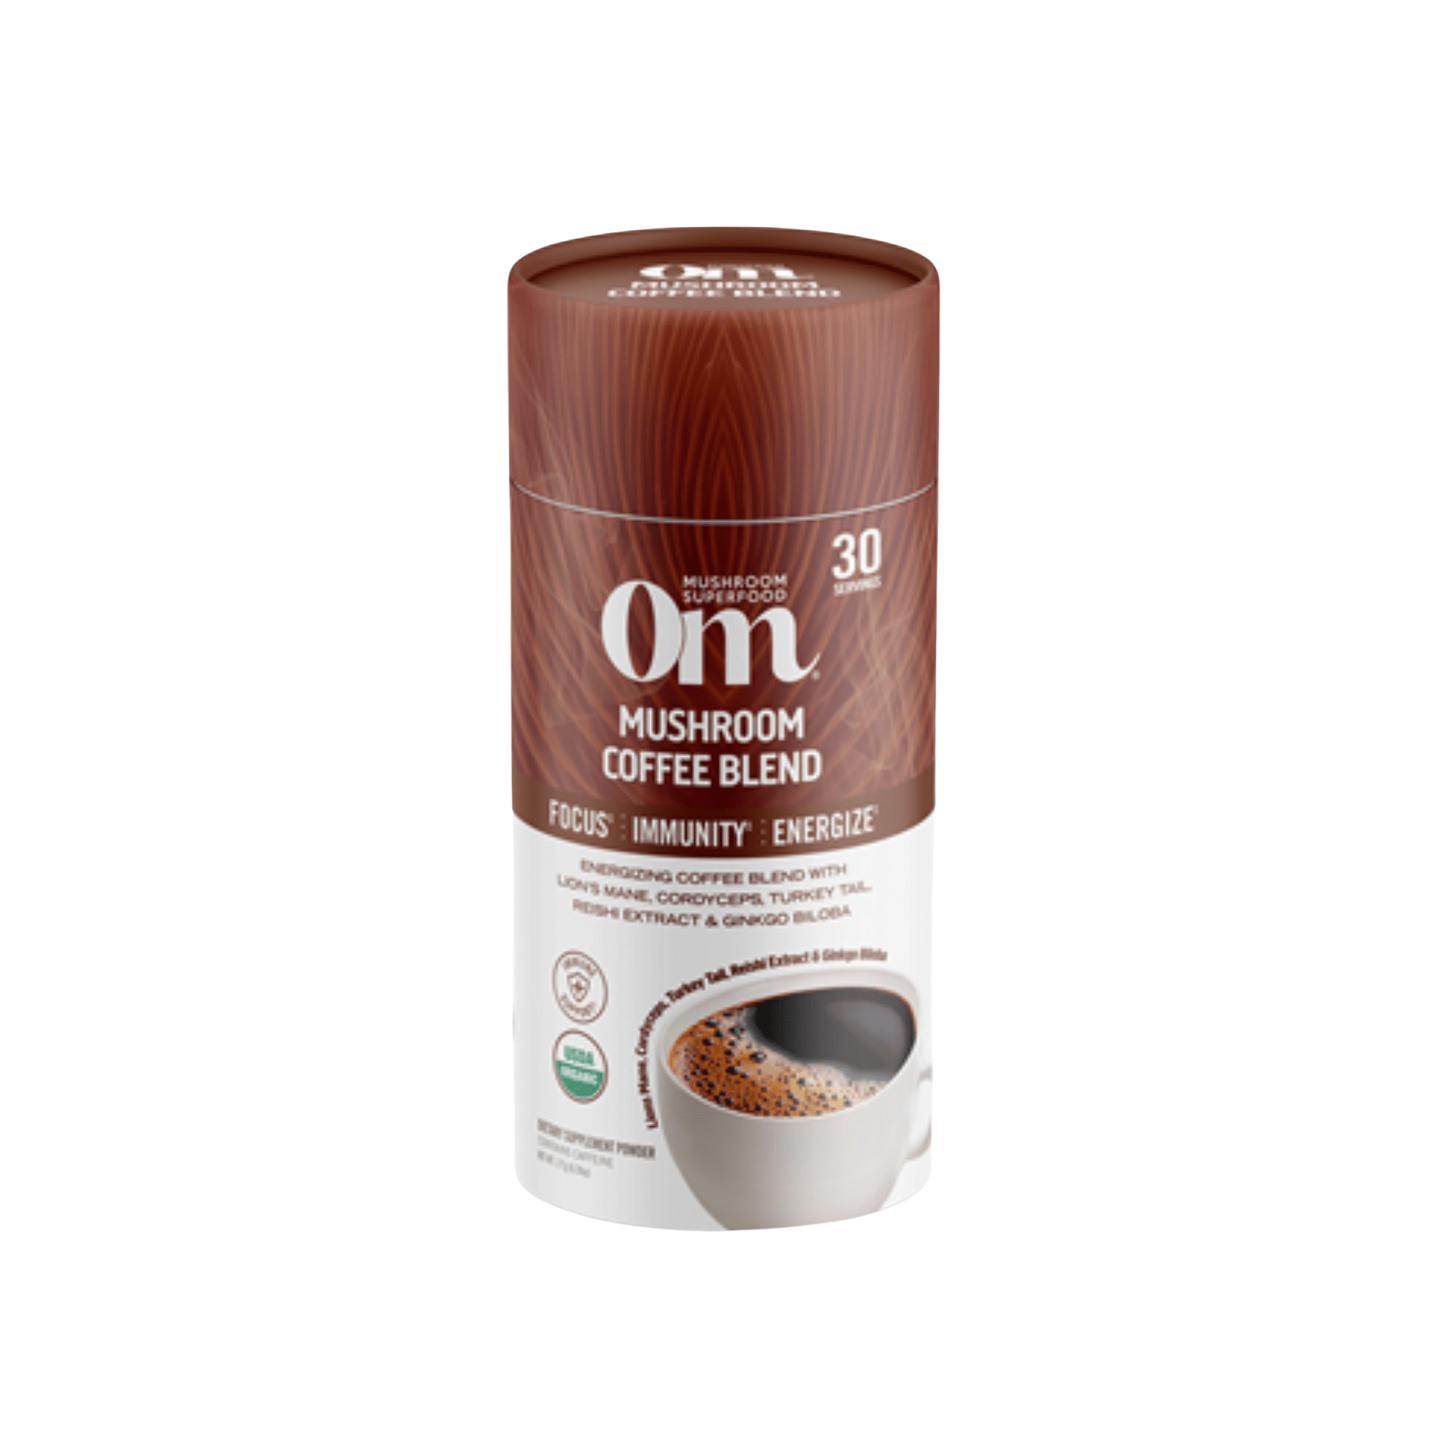 Om Mushroom Coffee Blend Powder